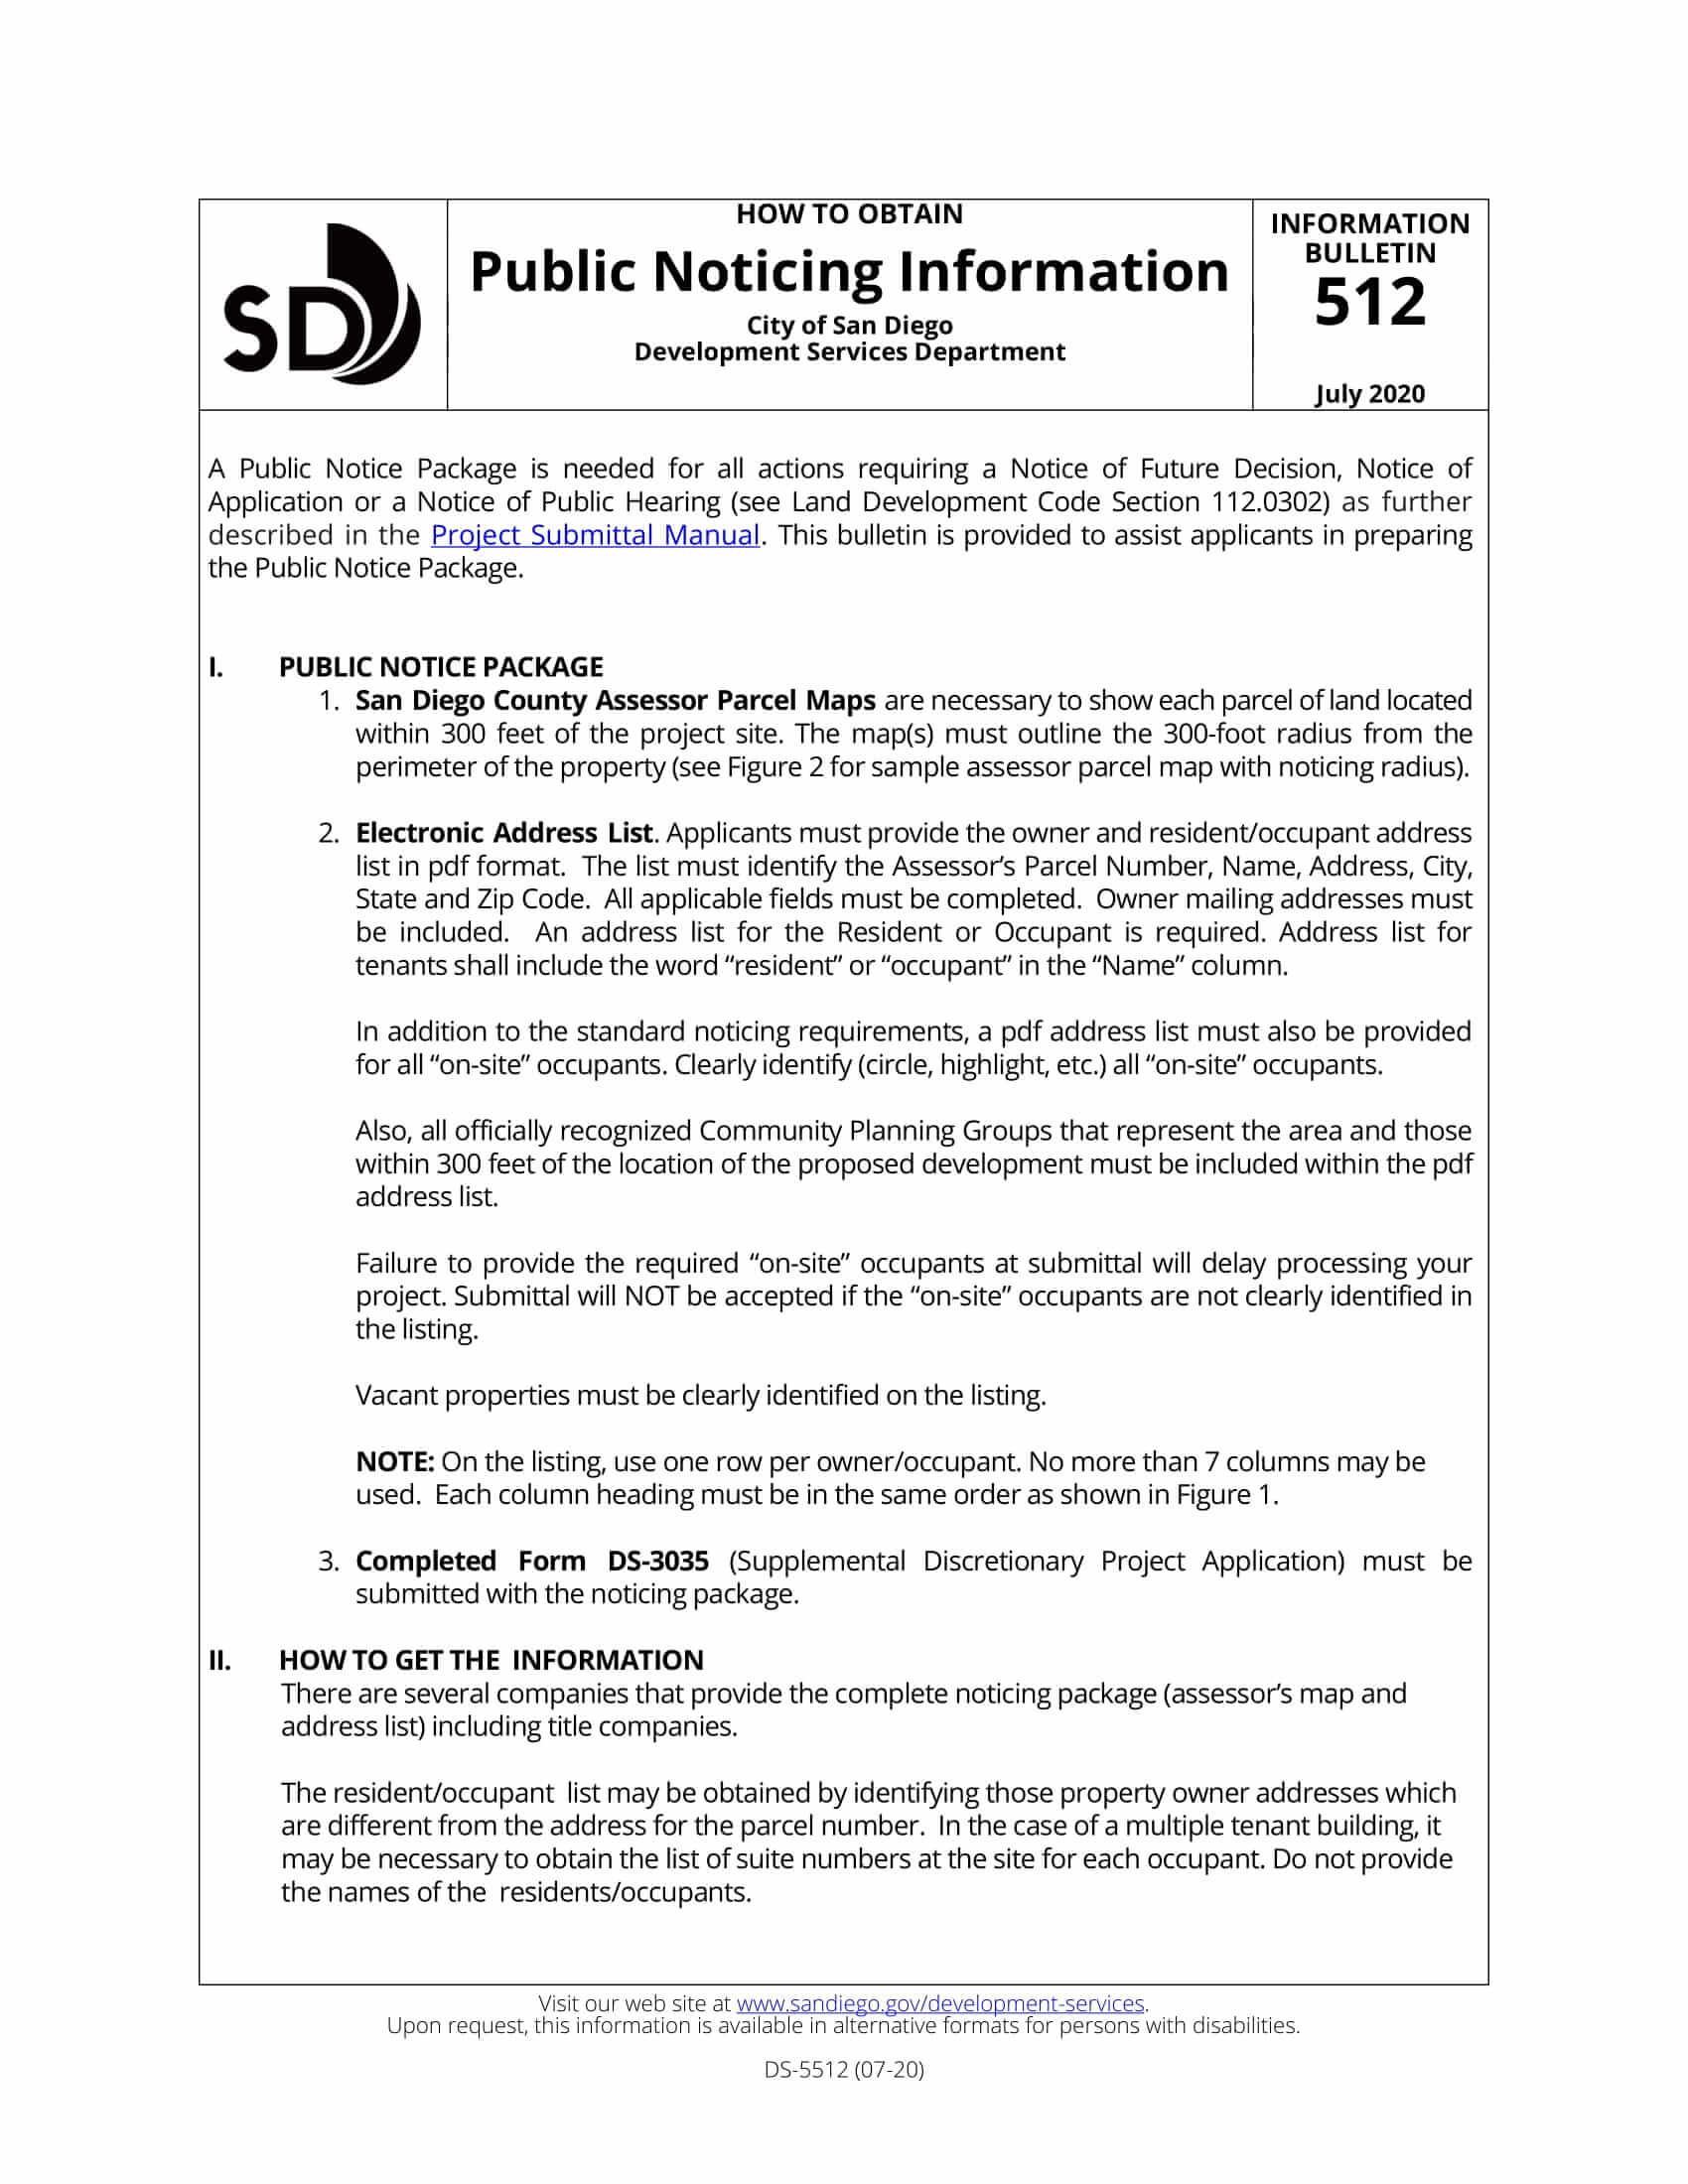 San Diego Public Noticing Information 512 Parcel Map 300 feet Electronic Address List.jpg